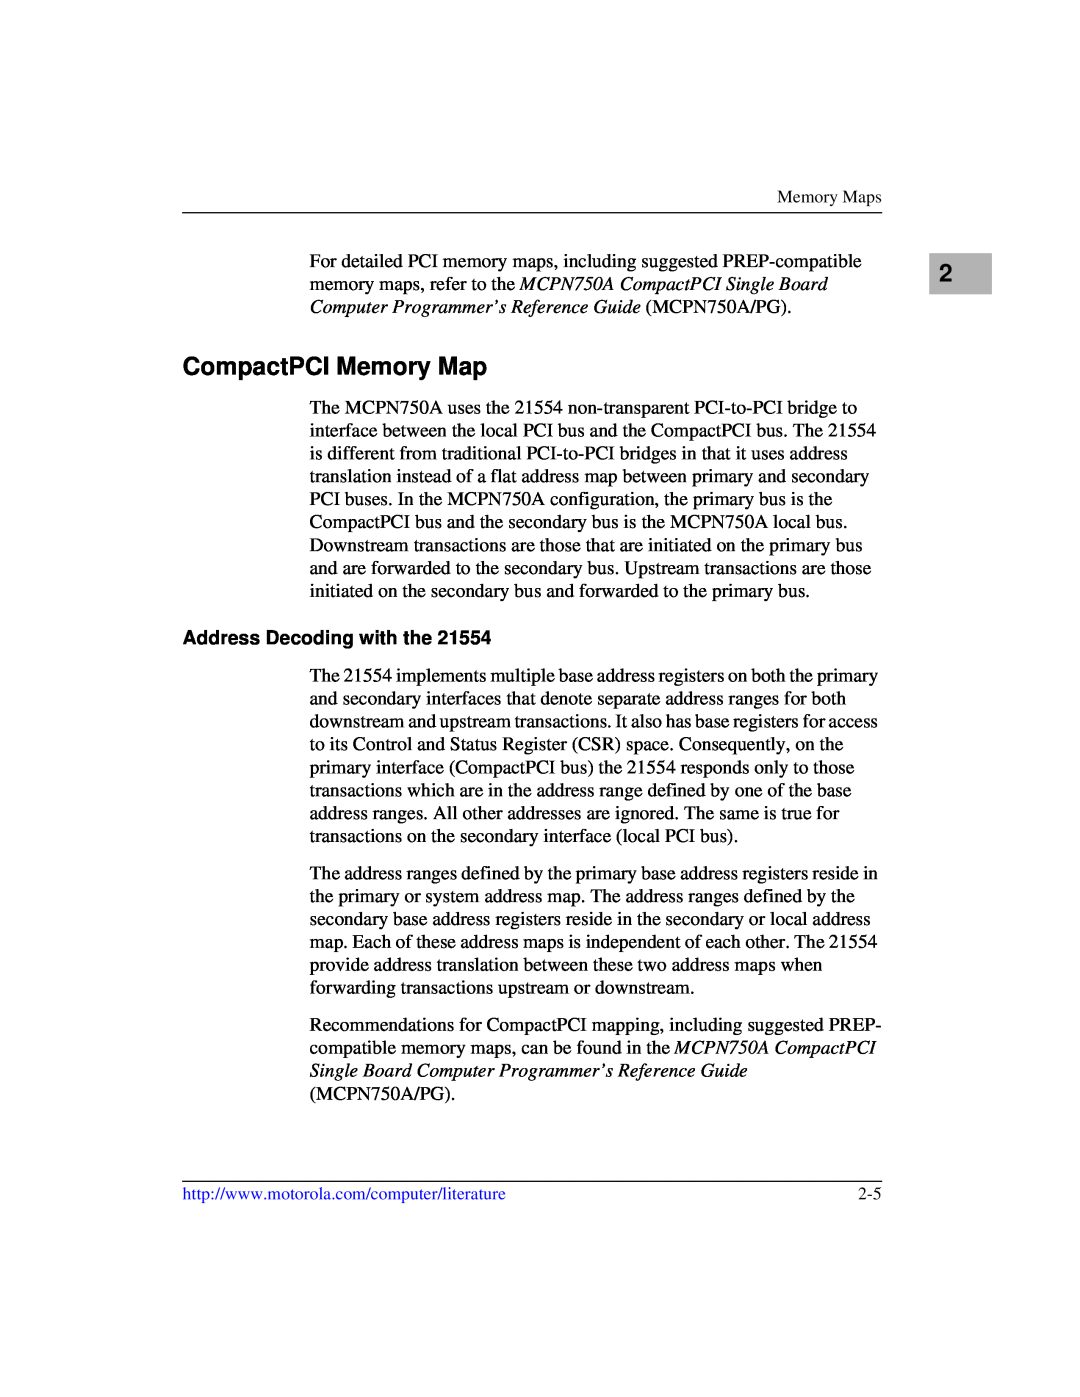 Motorola IH5, MCPN750A manual CompactPCI Memory Map, Address Decoding with the 